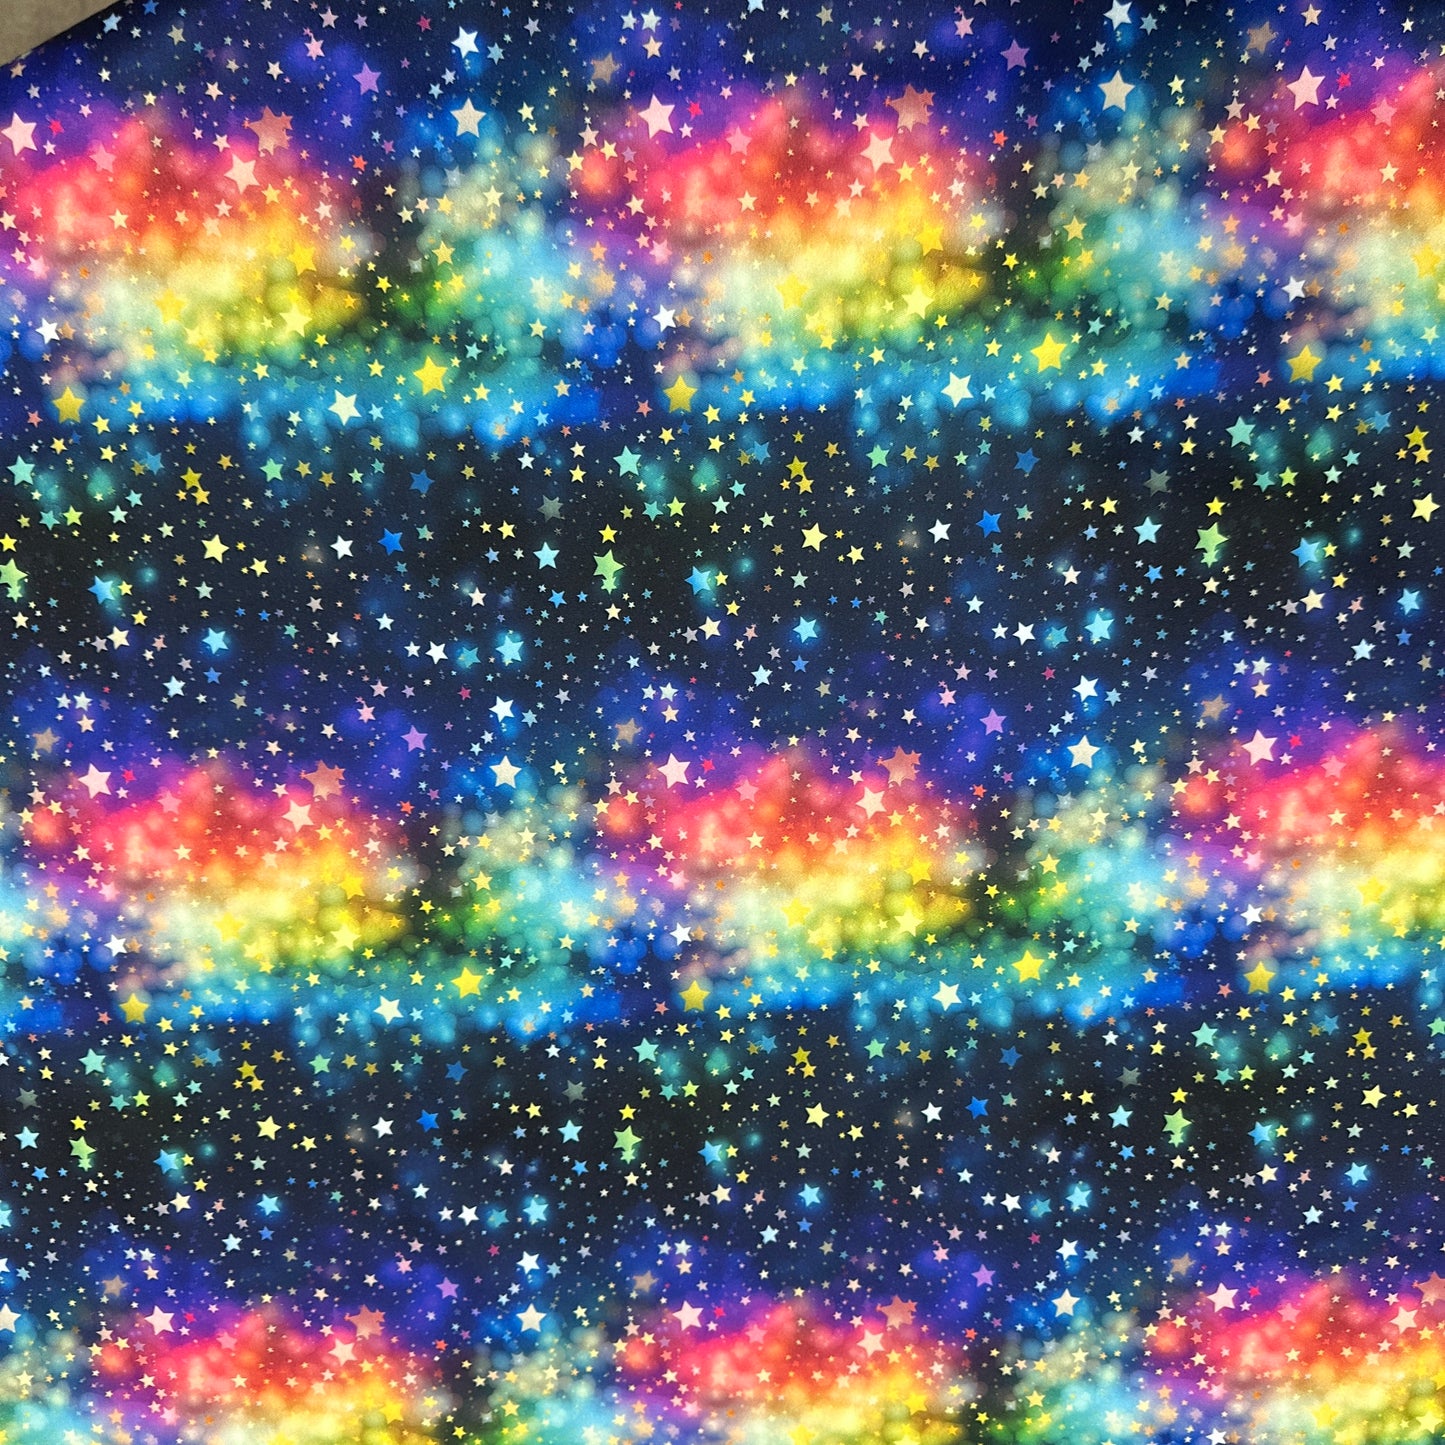 Rainbow Night Stars 1 mil PUL Fabric - Made in the USA